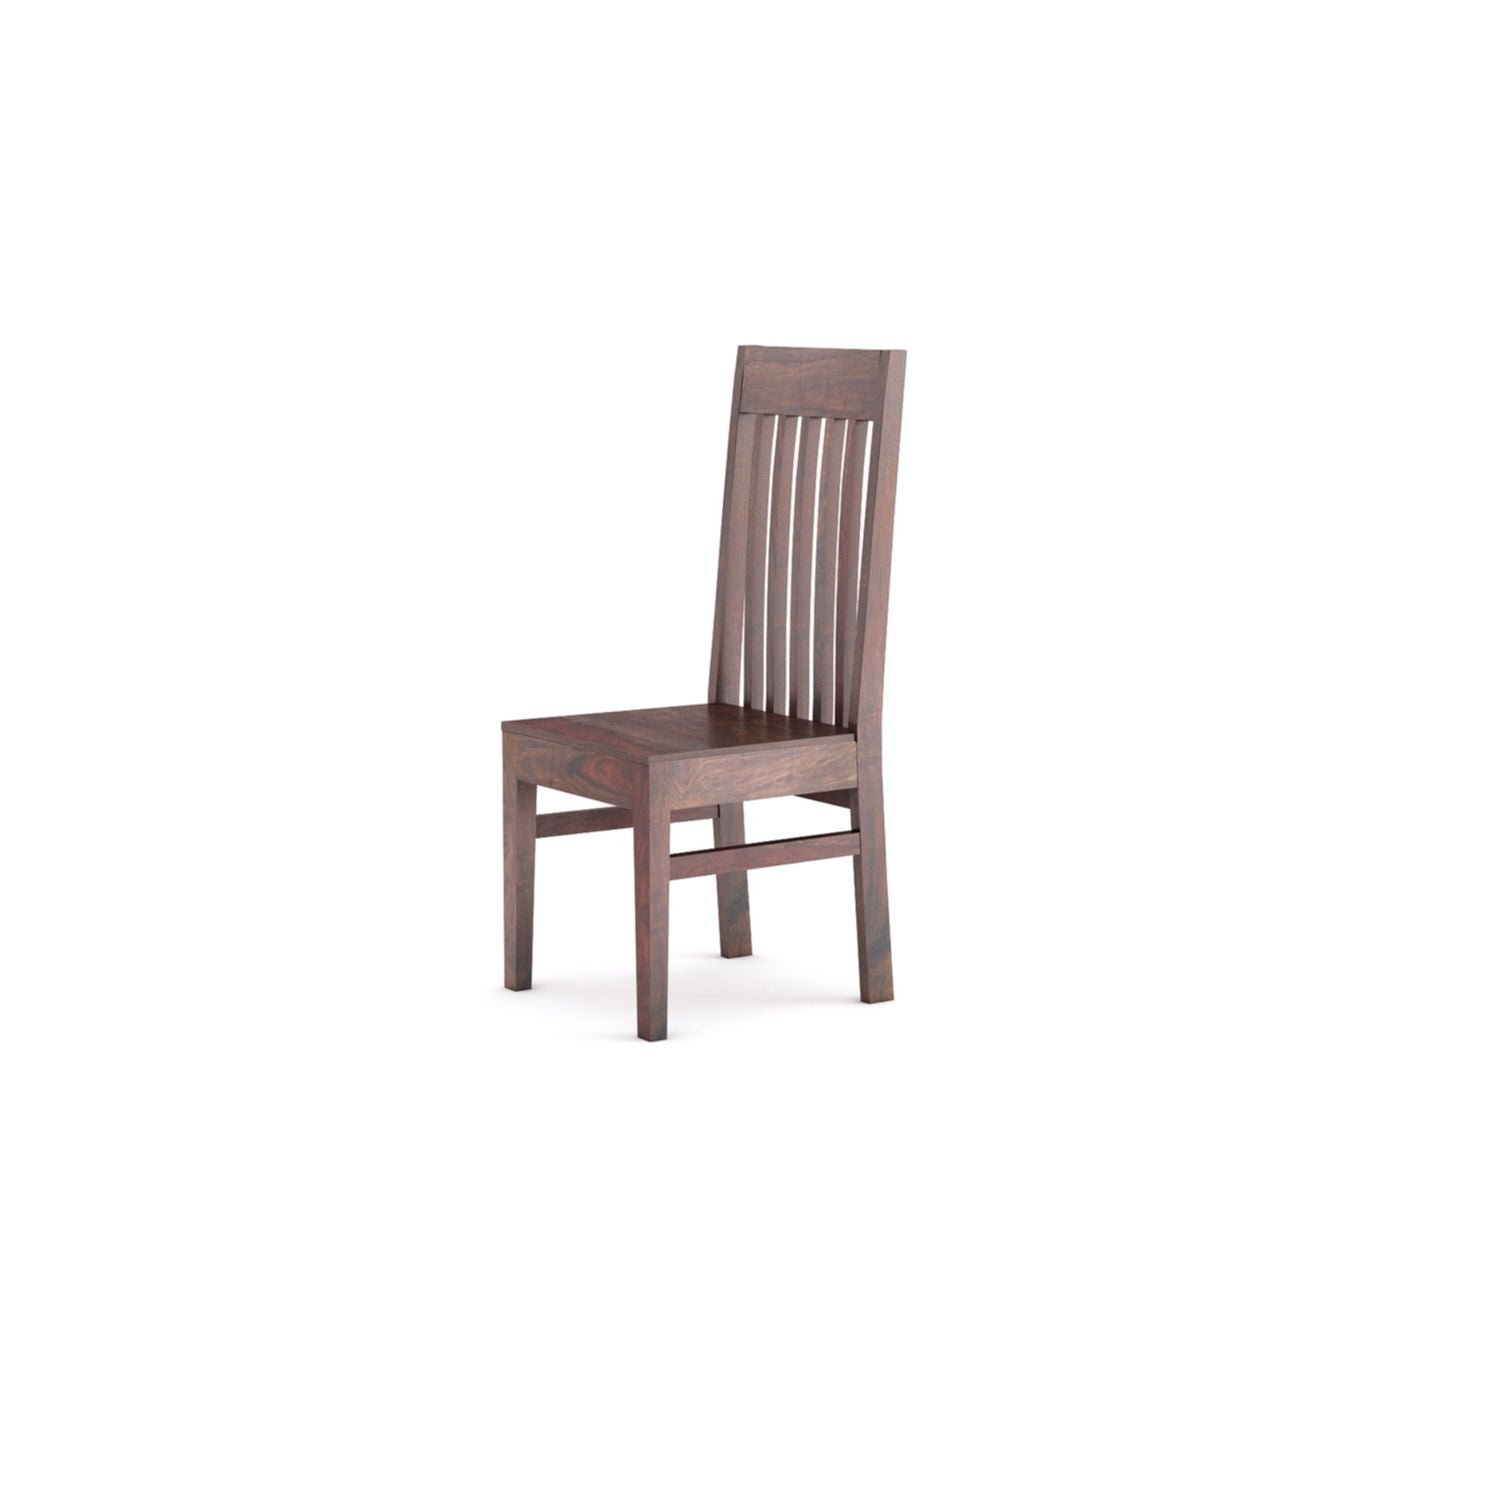 Minimal Solid Sheesham Wood Two Seater Dining Set (Plan Chairs, Walnut Finish)